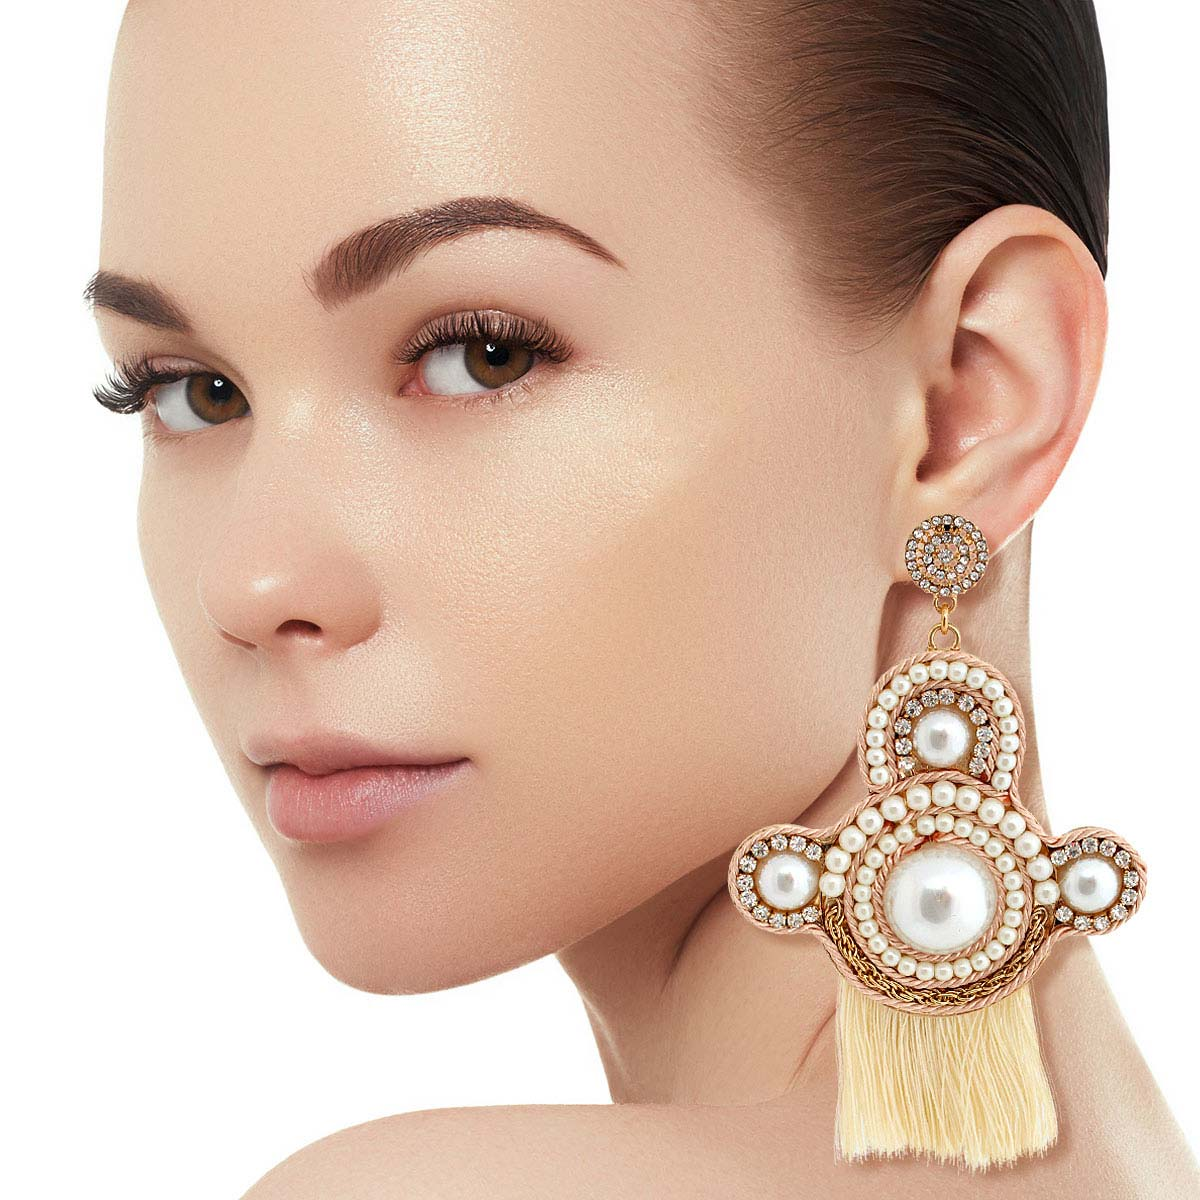 Cream Pearl and Stone Tassel Earrings